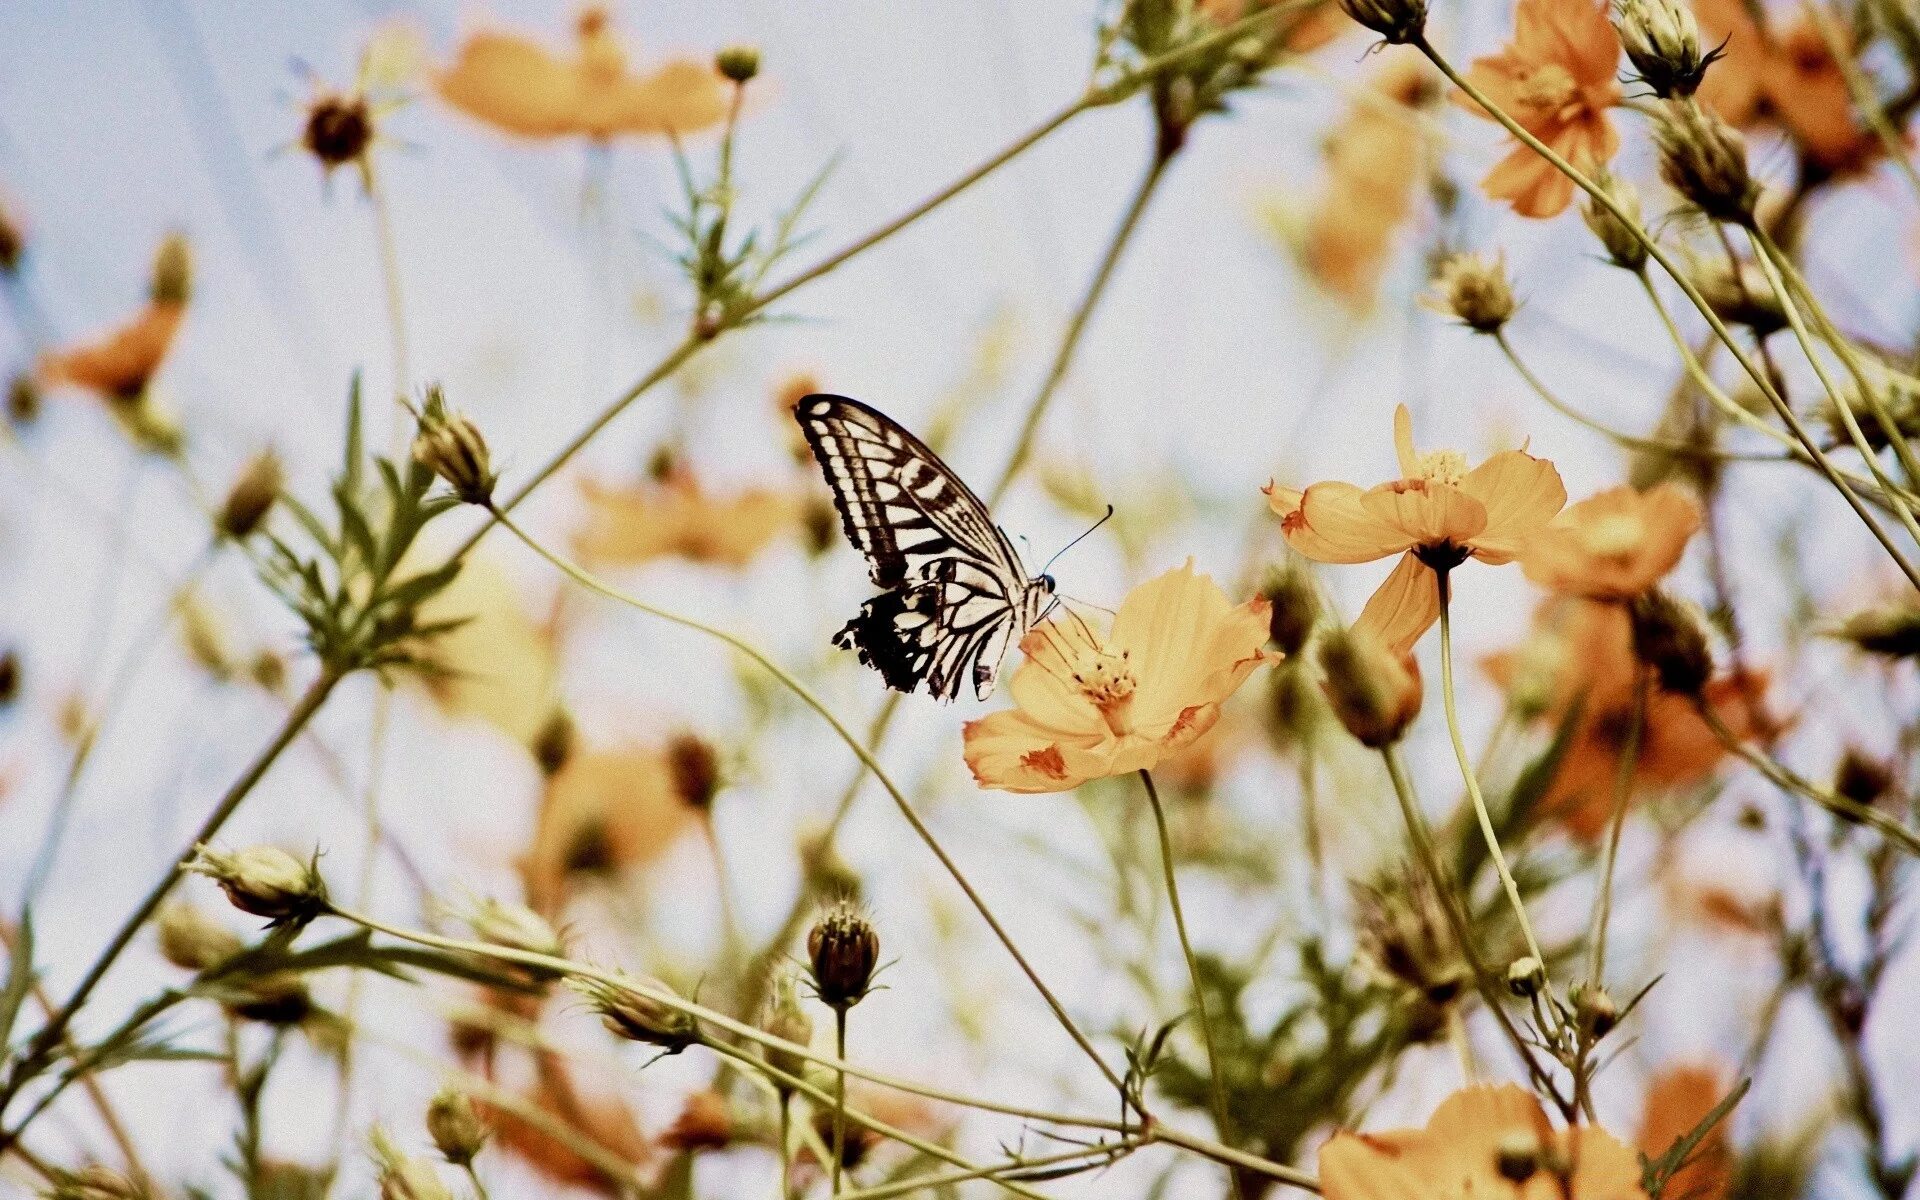 Обои на телефон эстетика лето. Бабочка на цветке. Пейзаж с бабочками. Бабочки Эстетика. Лето цветы бабочки.